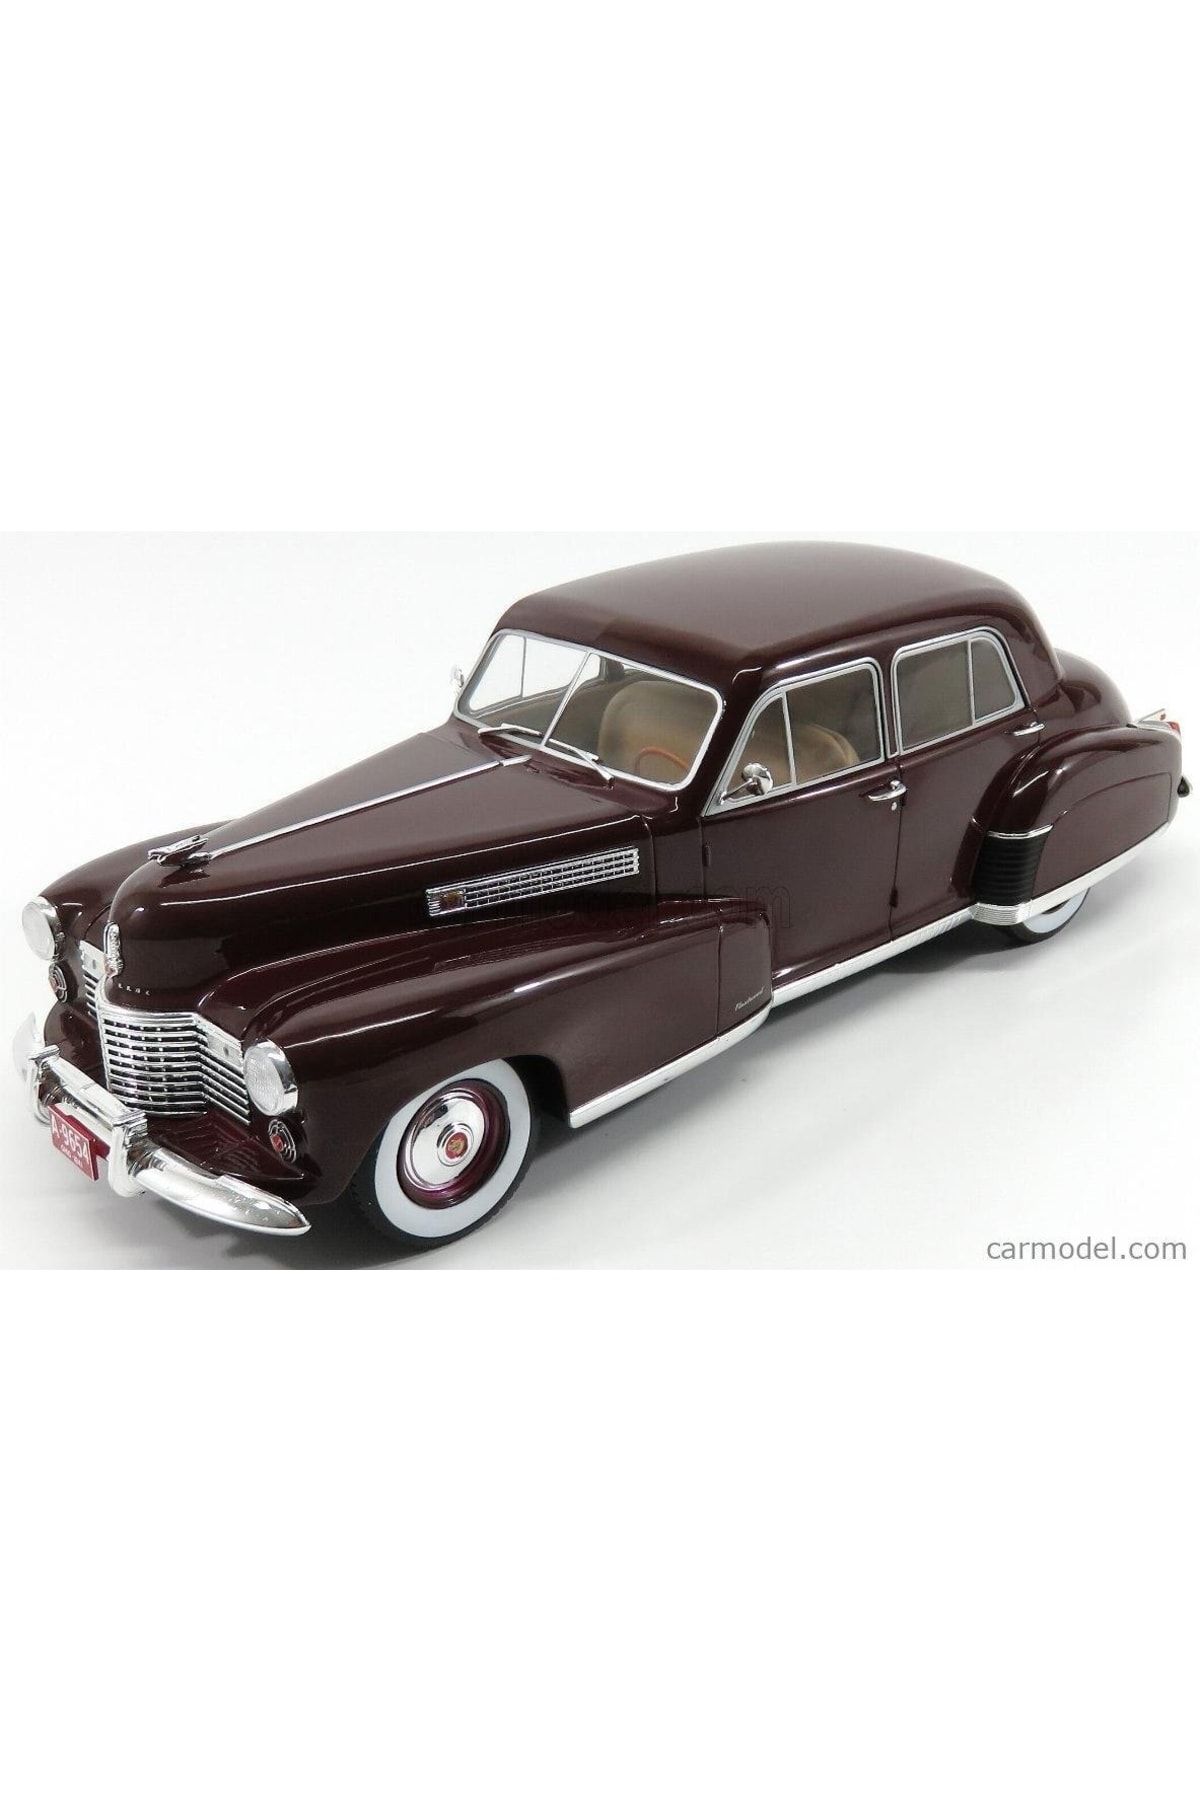 Kayra 1941 Cadillac Fleetwood Series 60 Special Sedan *s